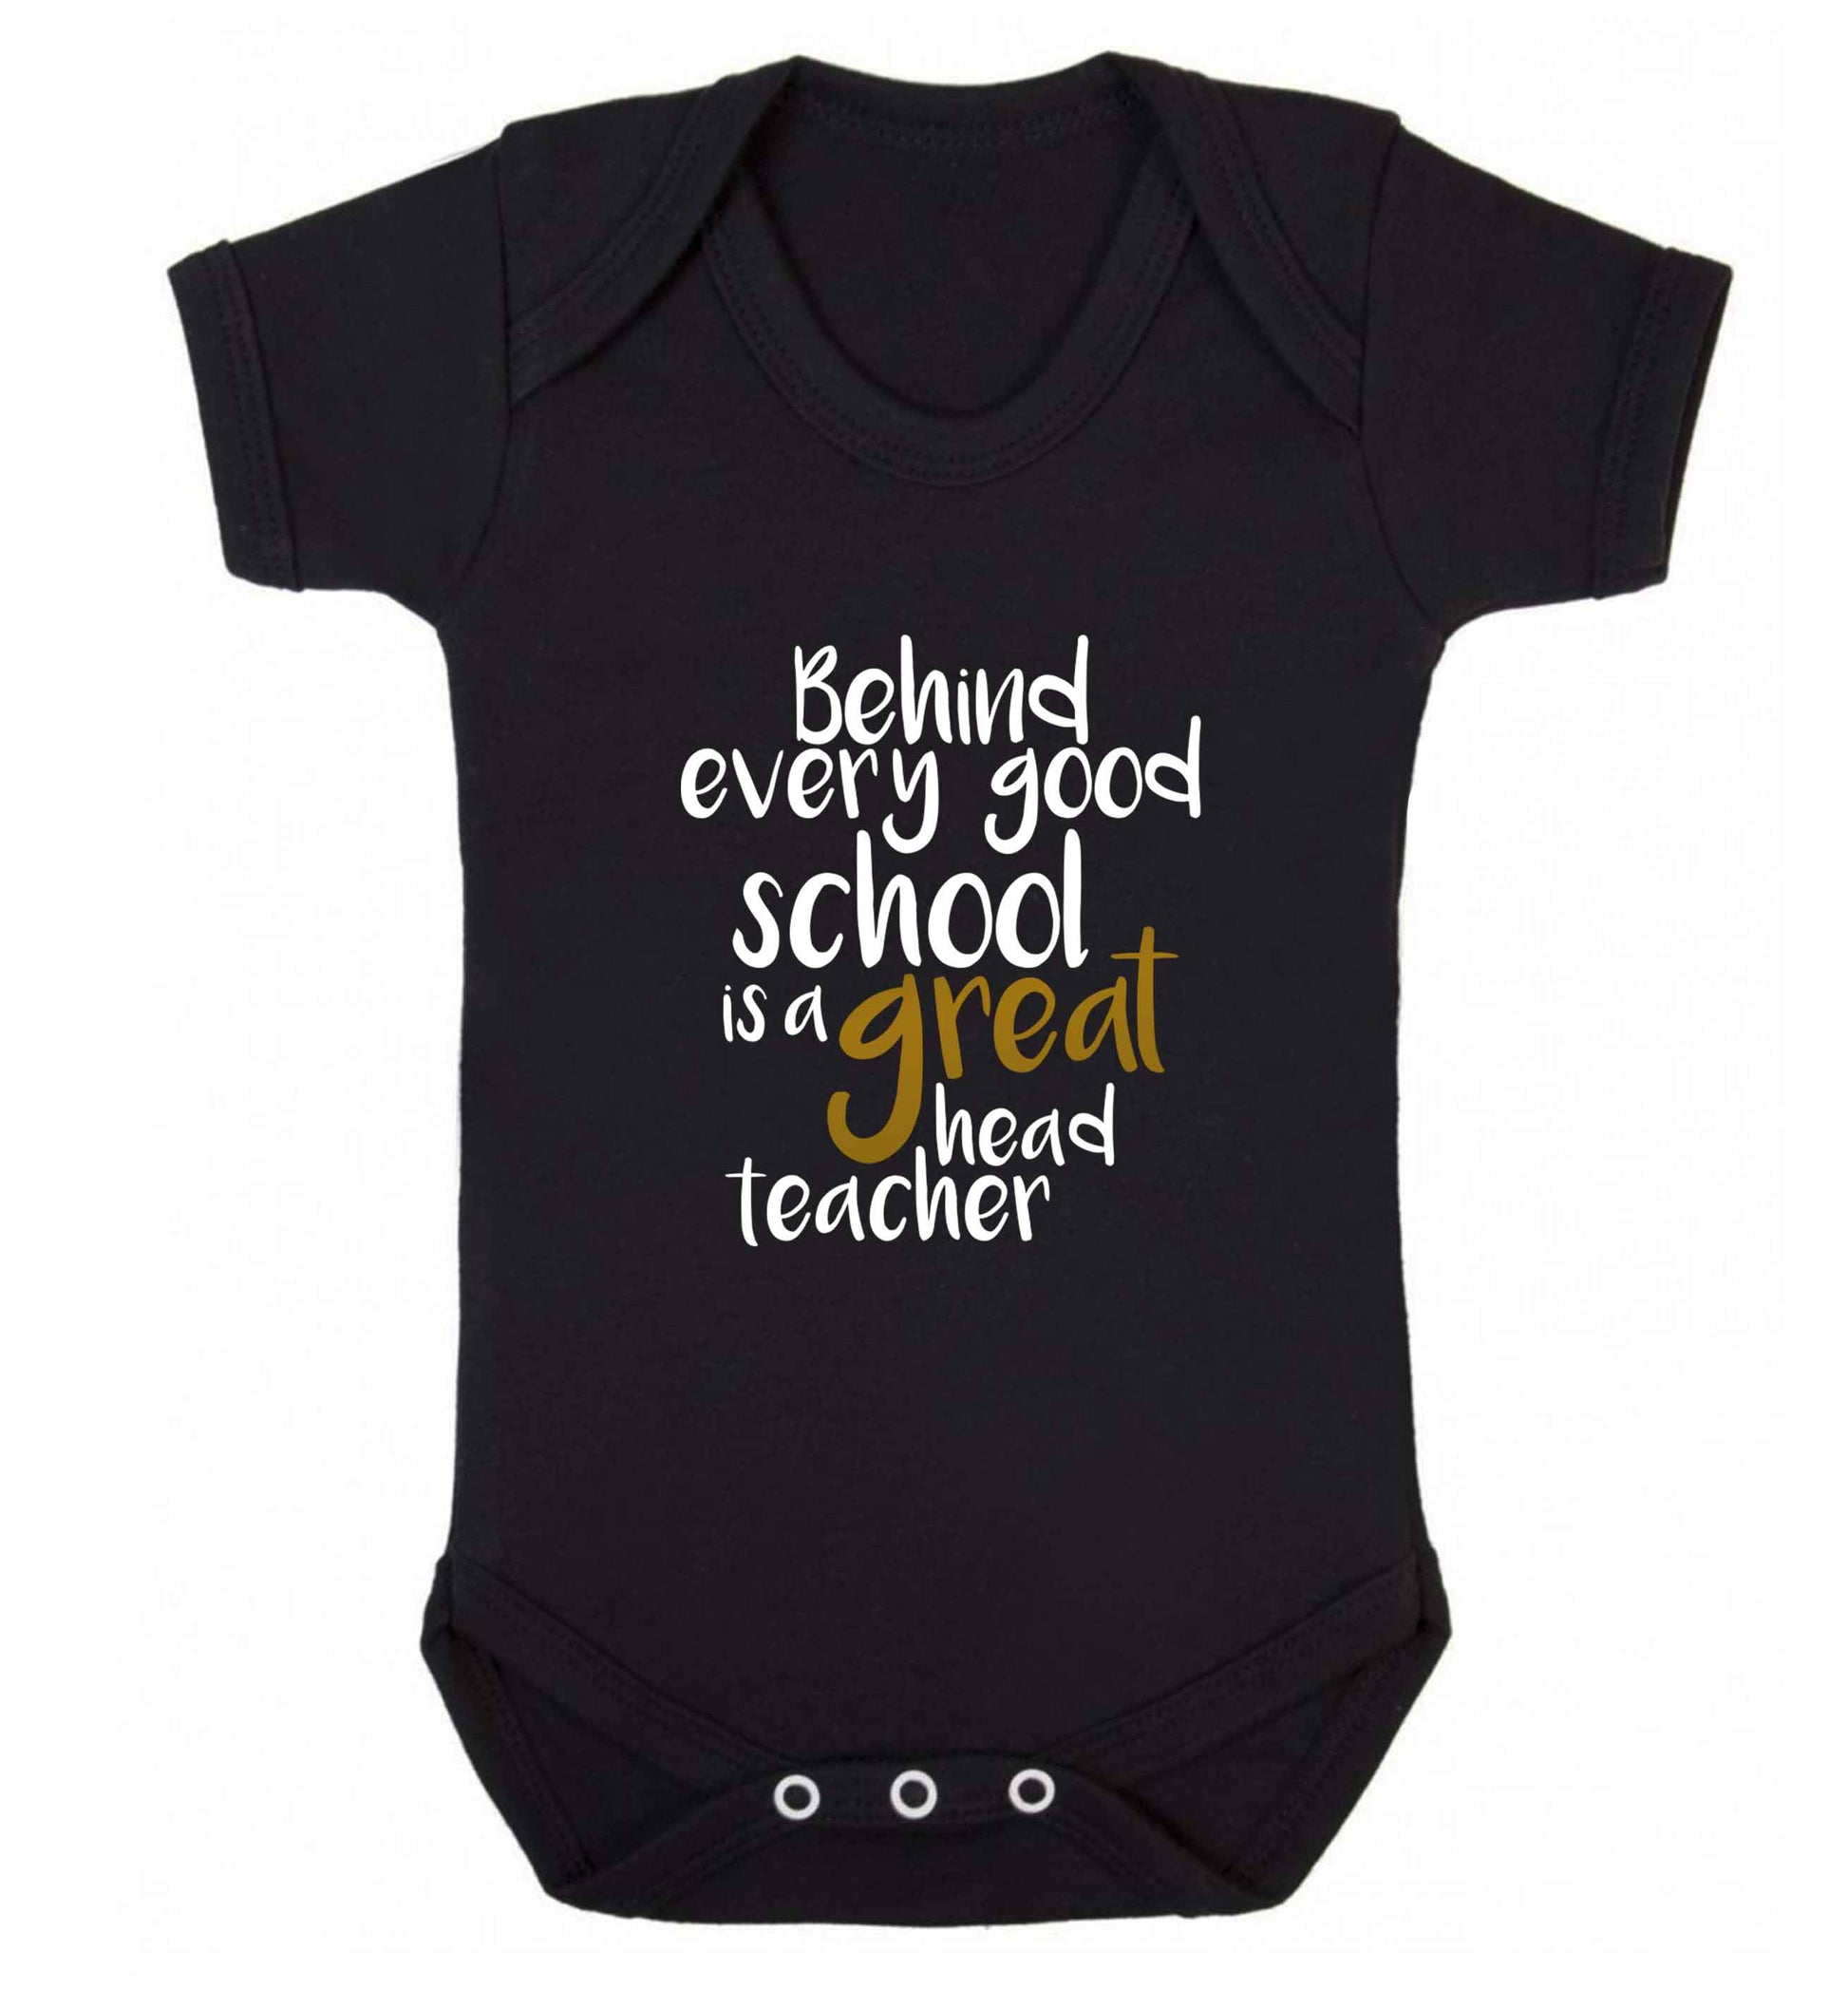 Behind every good school is a great head teacher baby vest black 18-24 months